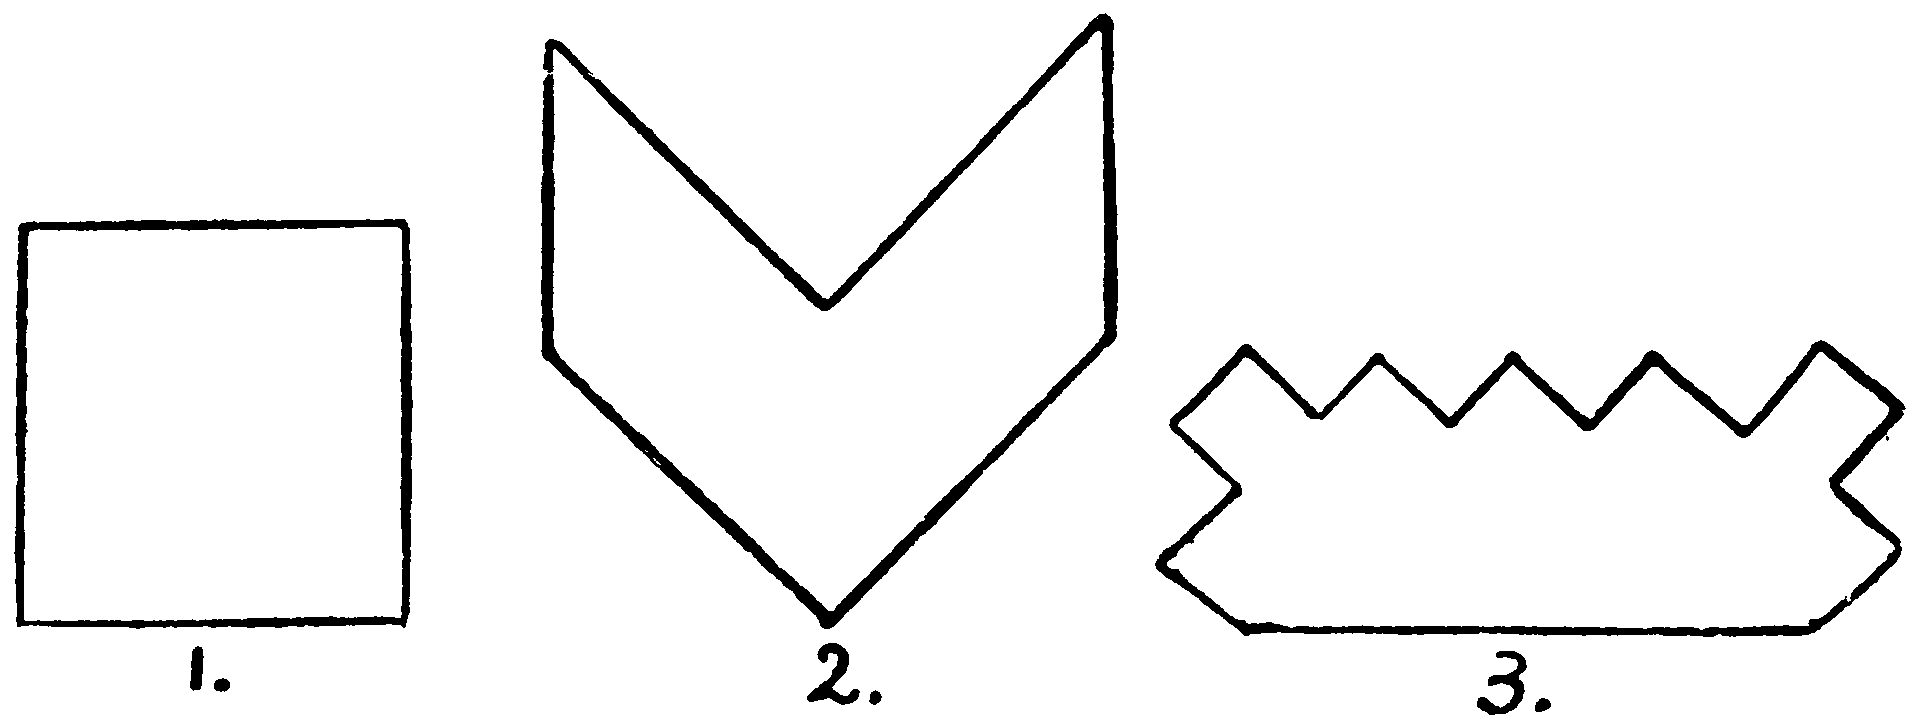 Three shapes